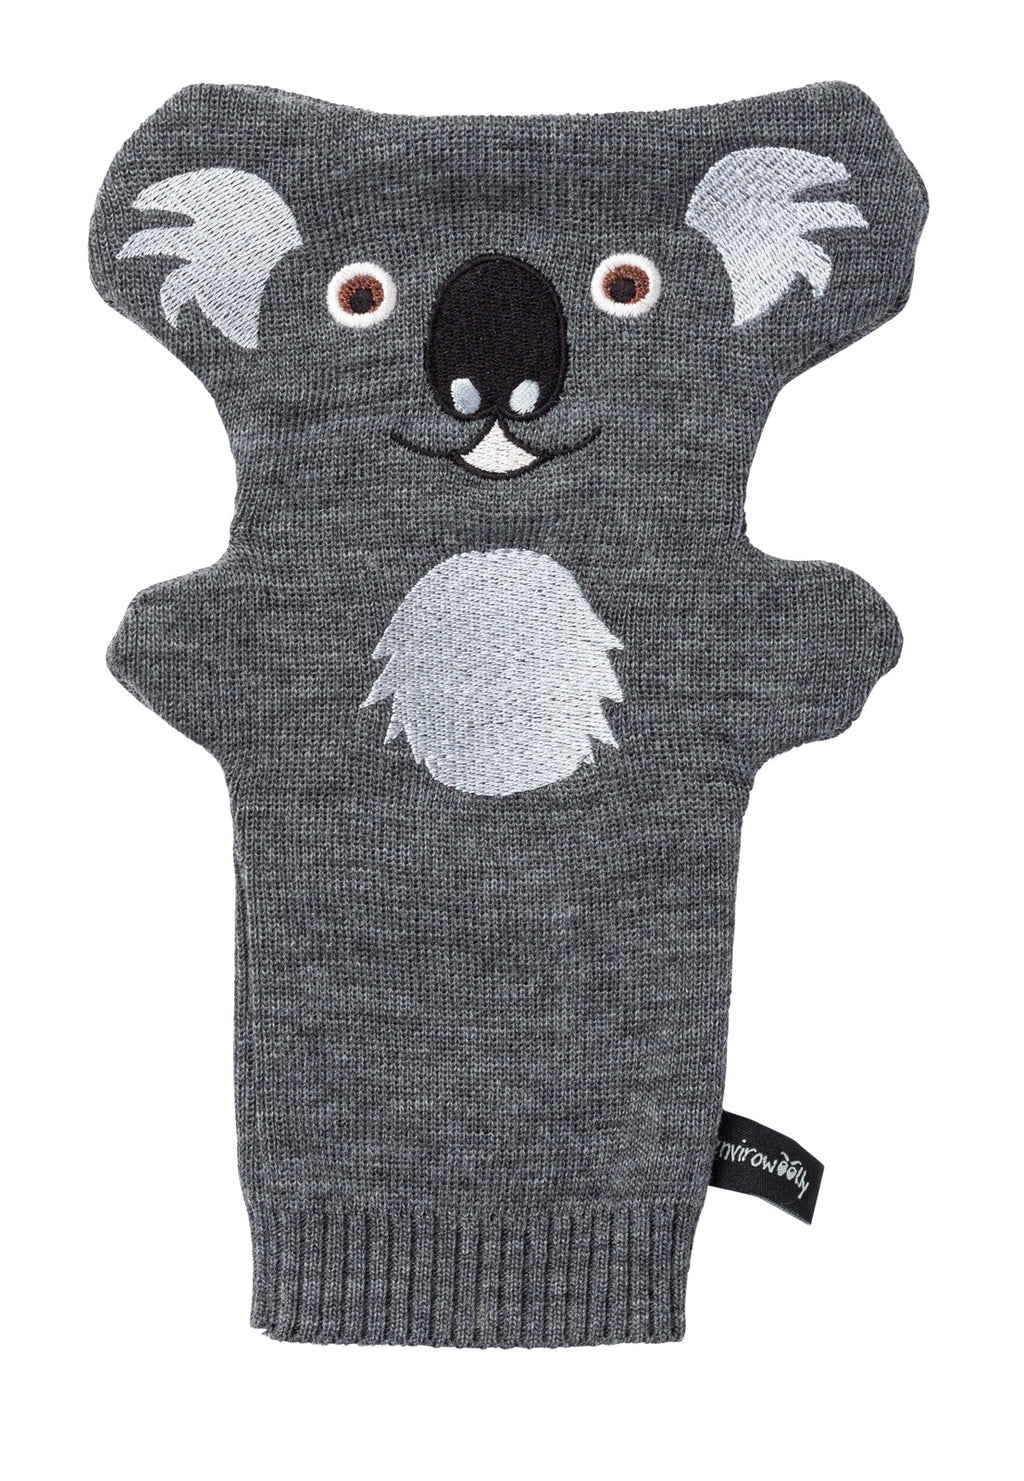 Devilknits - Hand Puppet Koala